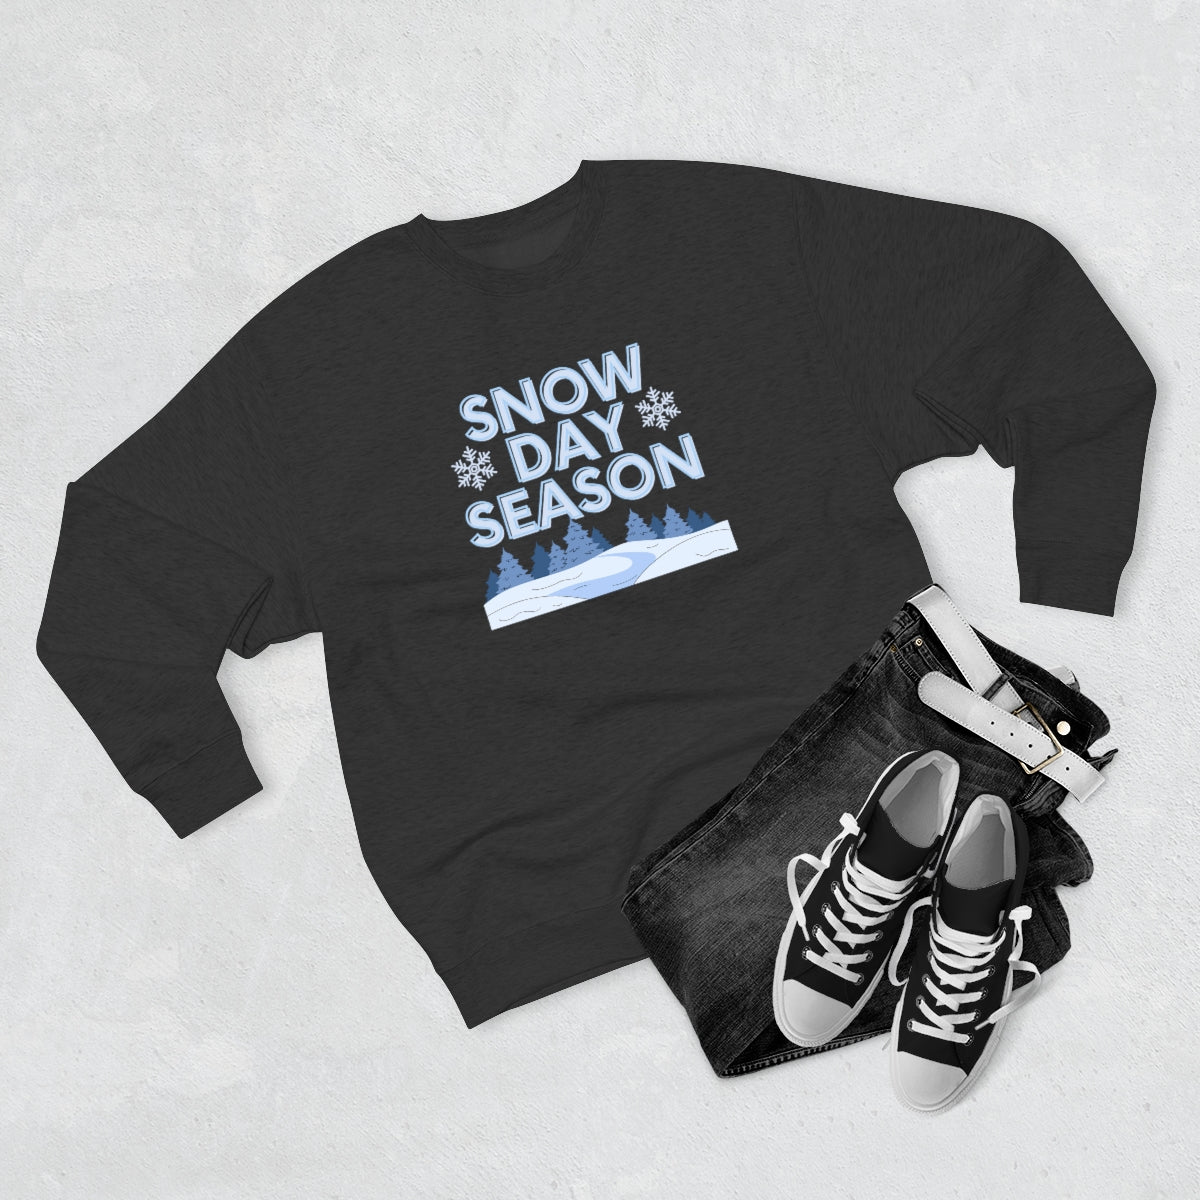 Snow Day Season Sweatshirt